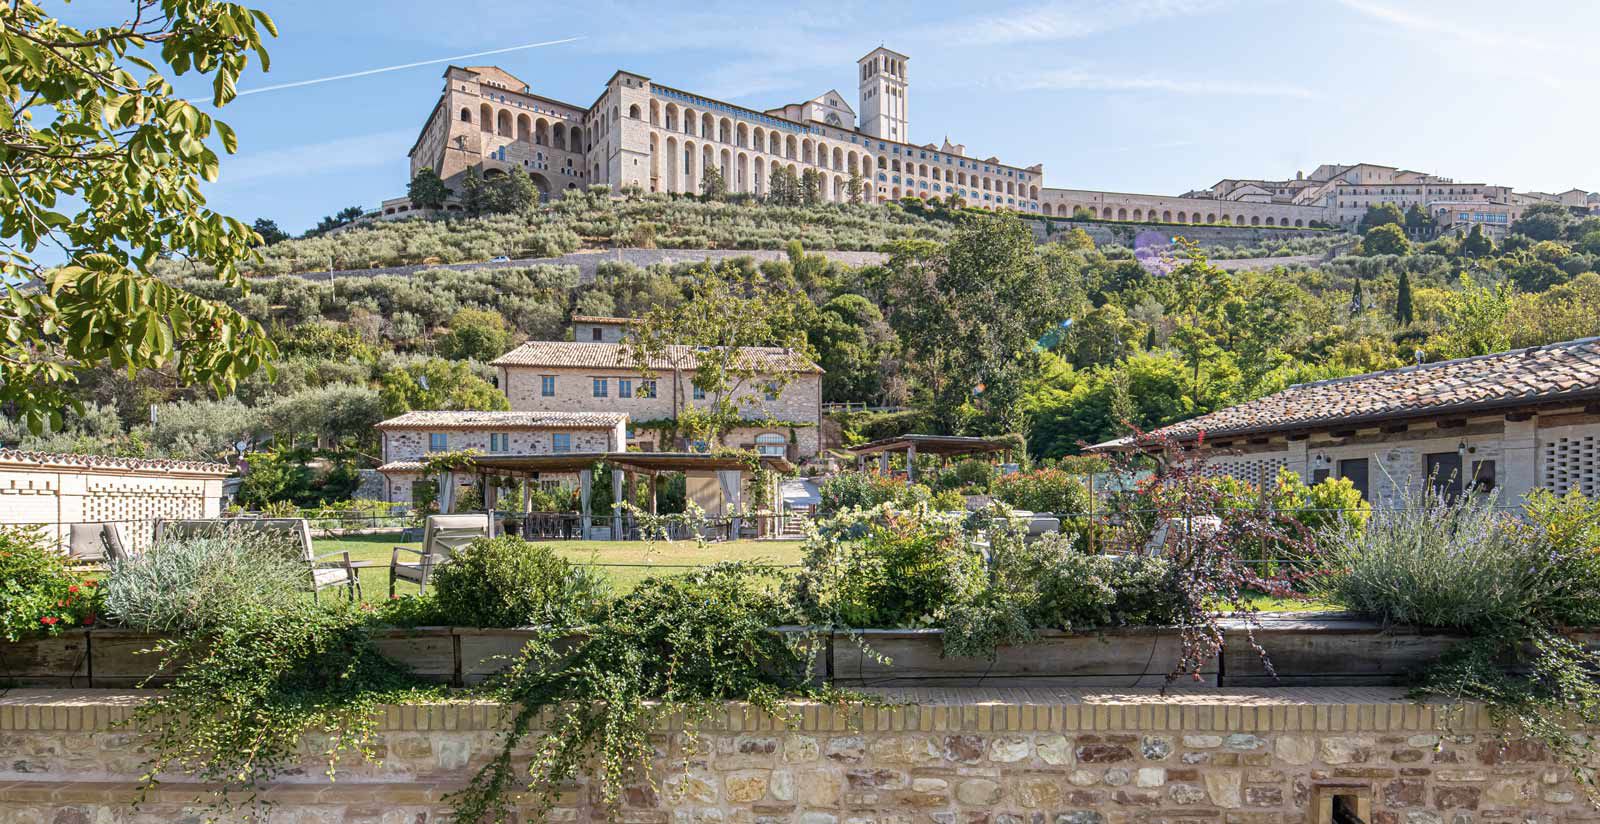 Borgo Antichi Orti - Location di lusso per matrimoni Assisi 4